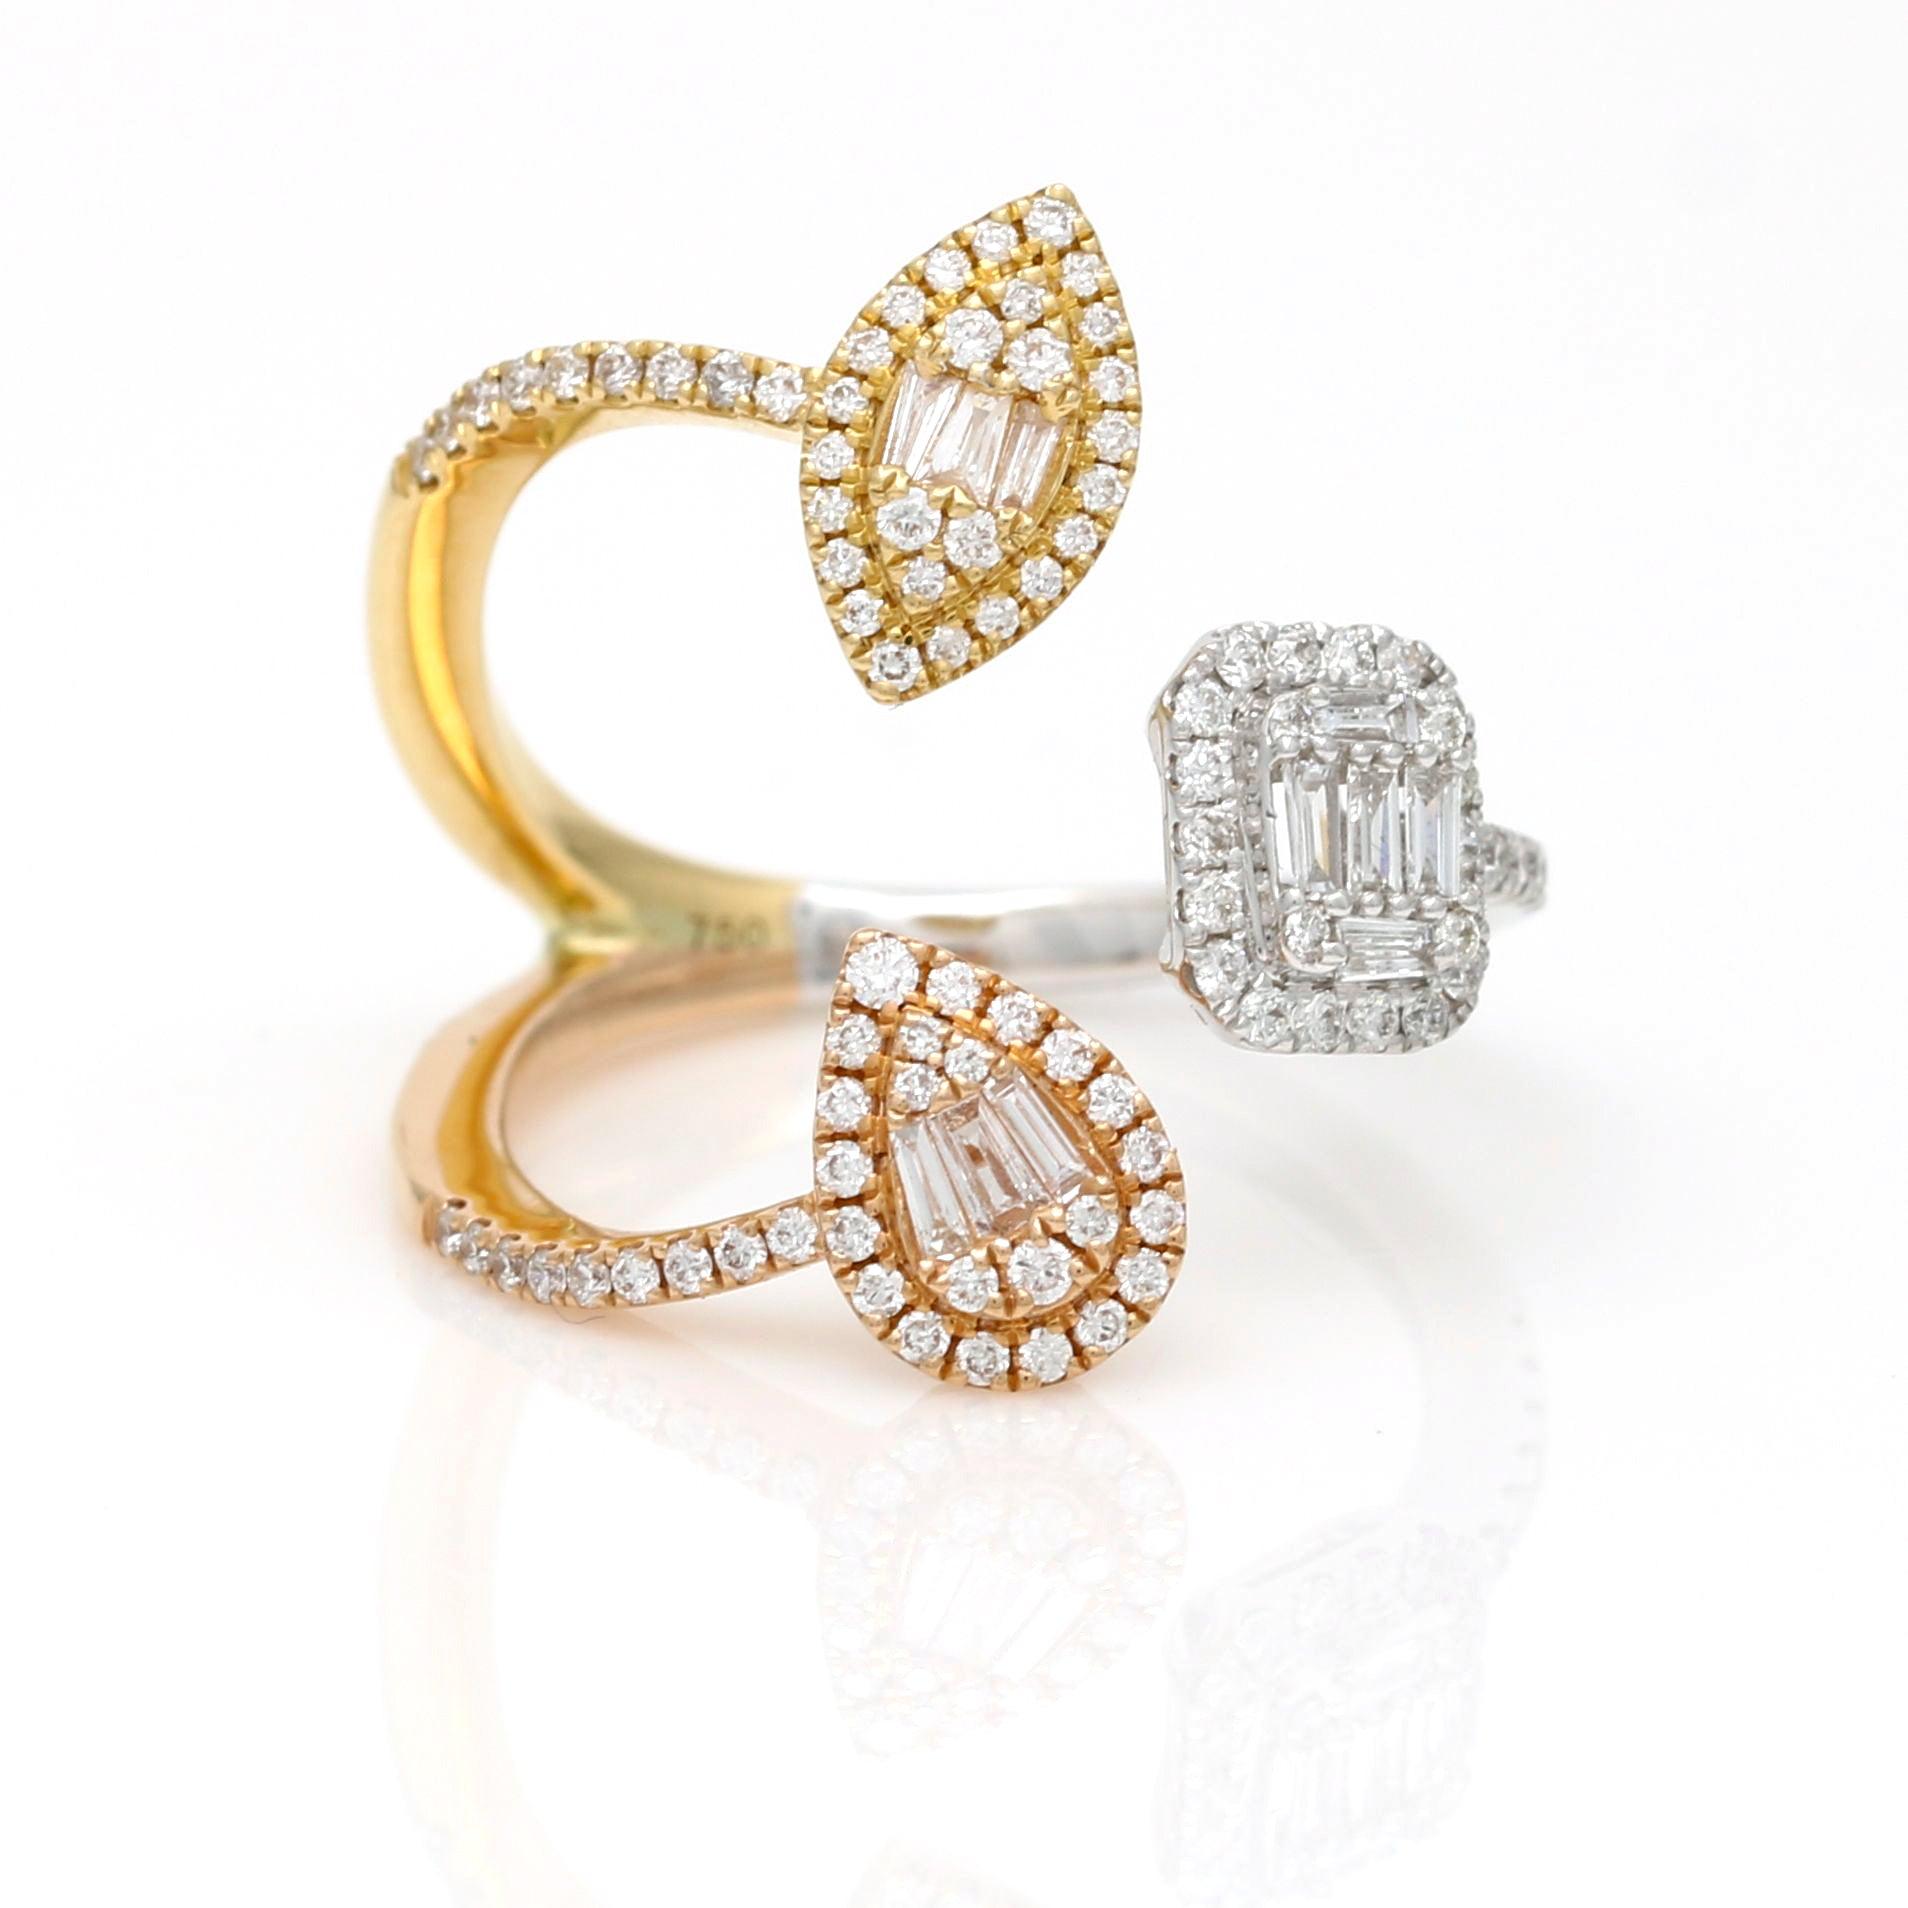 Women's Modern Minimalistic Diamond Statement Ring in 18k Tri-Color Gold - 31 Jewels Inc.